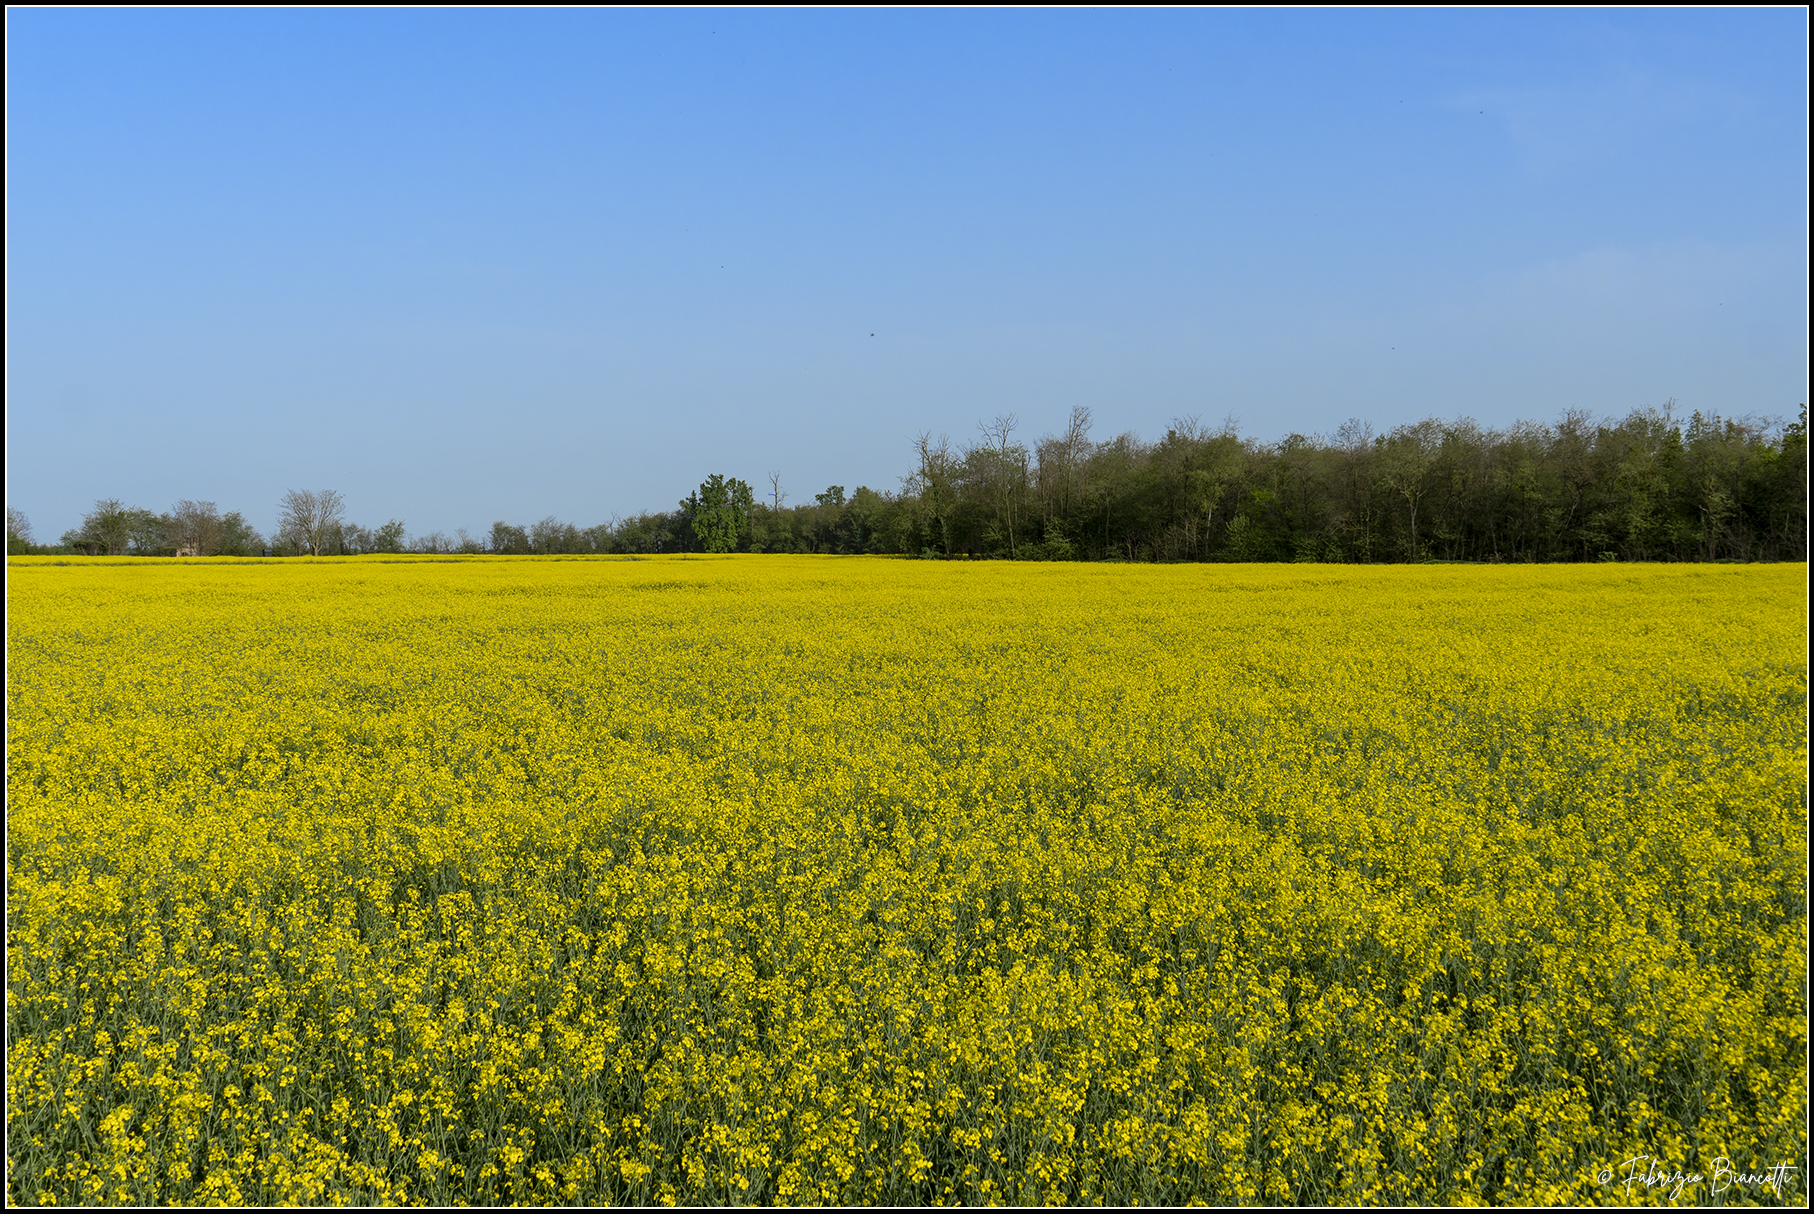 The yellow rapeseed fields of Novara...